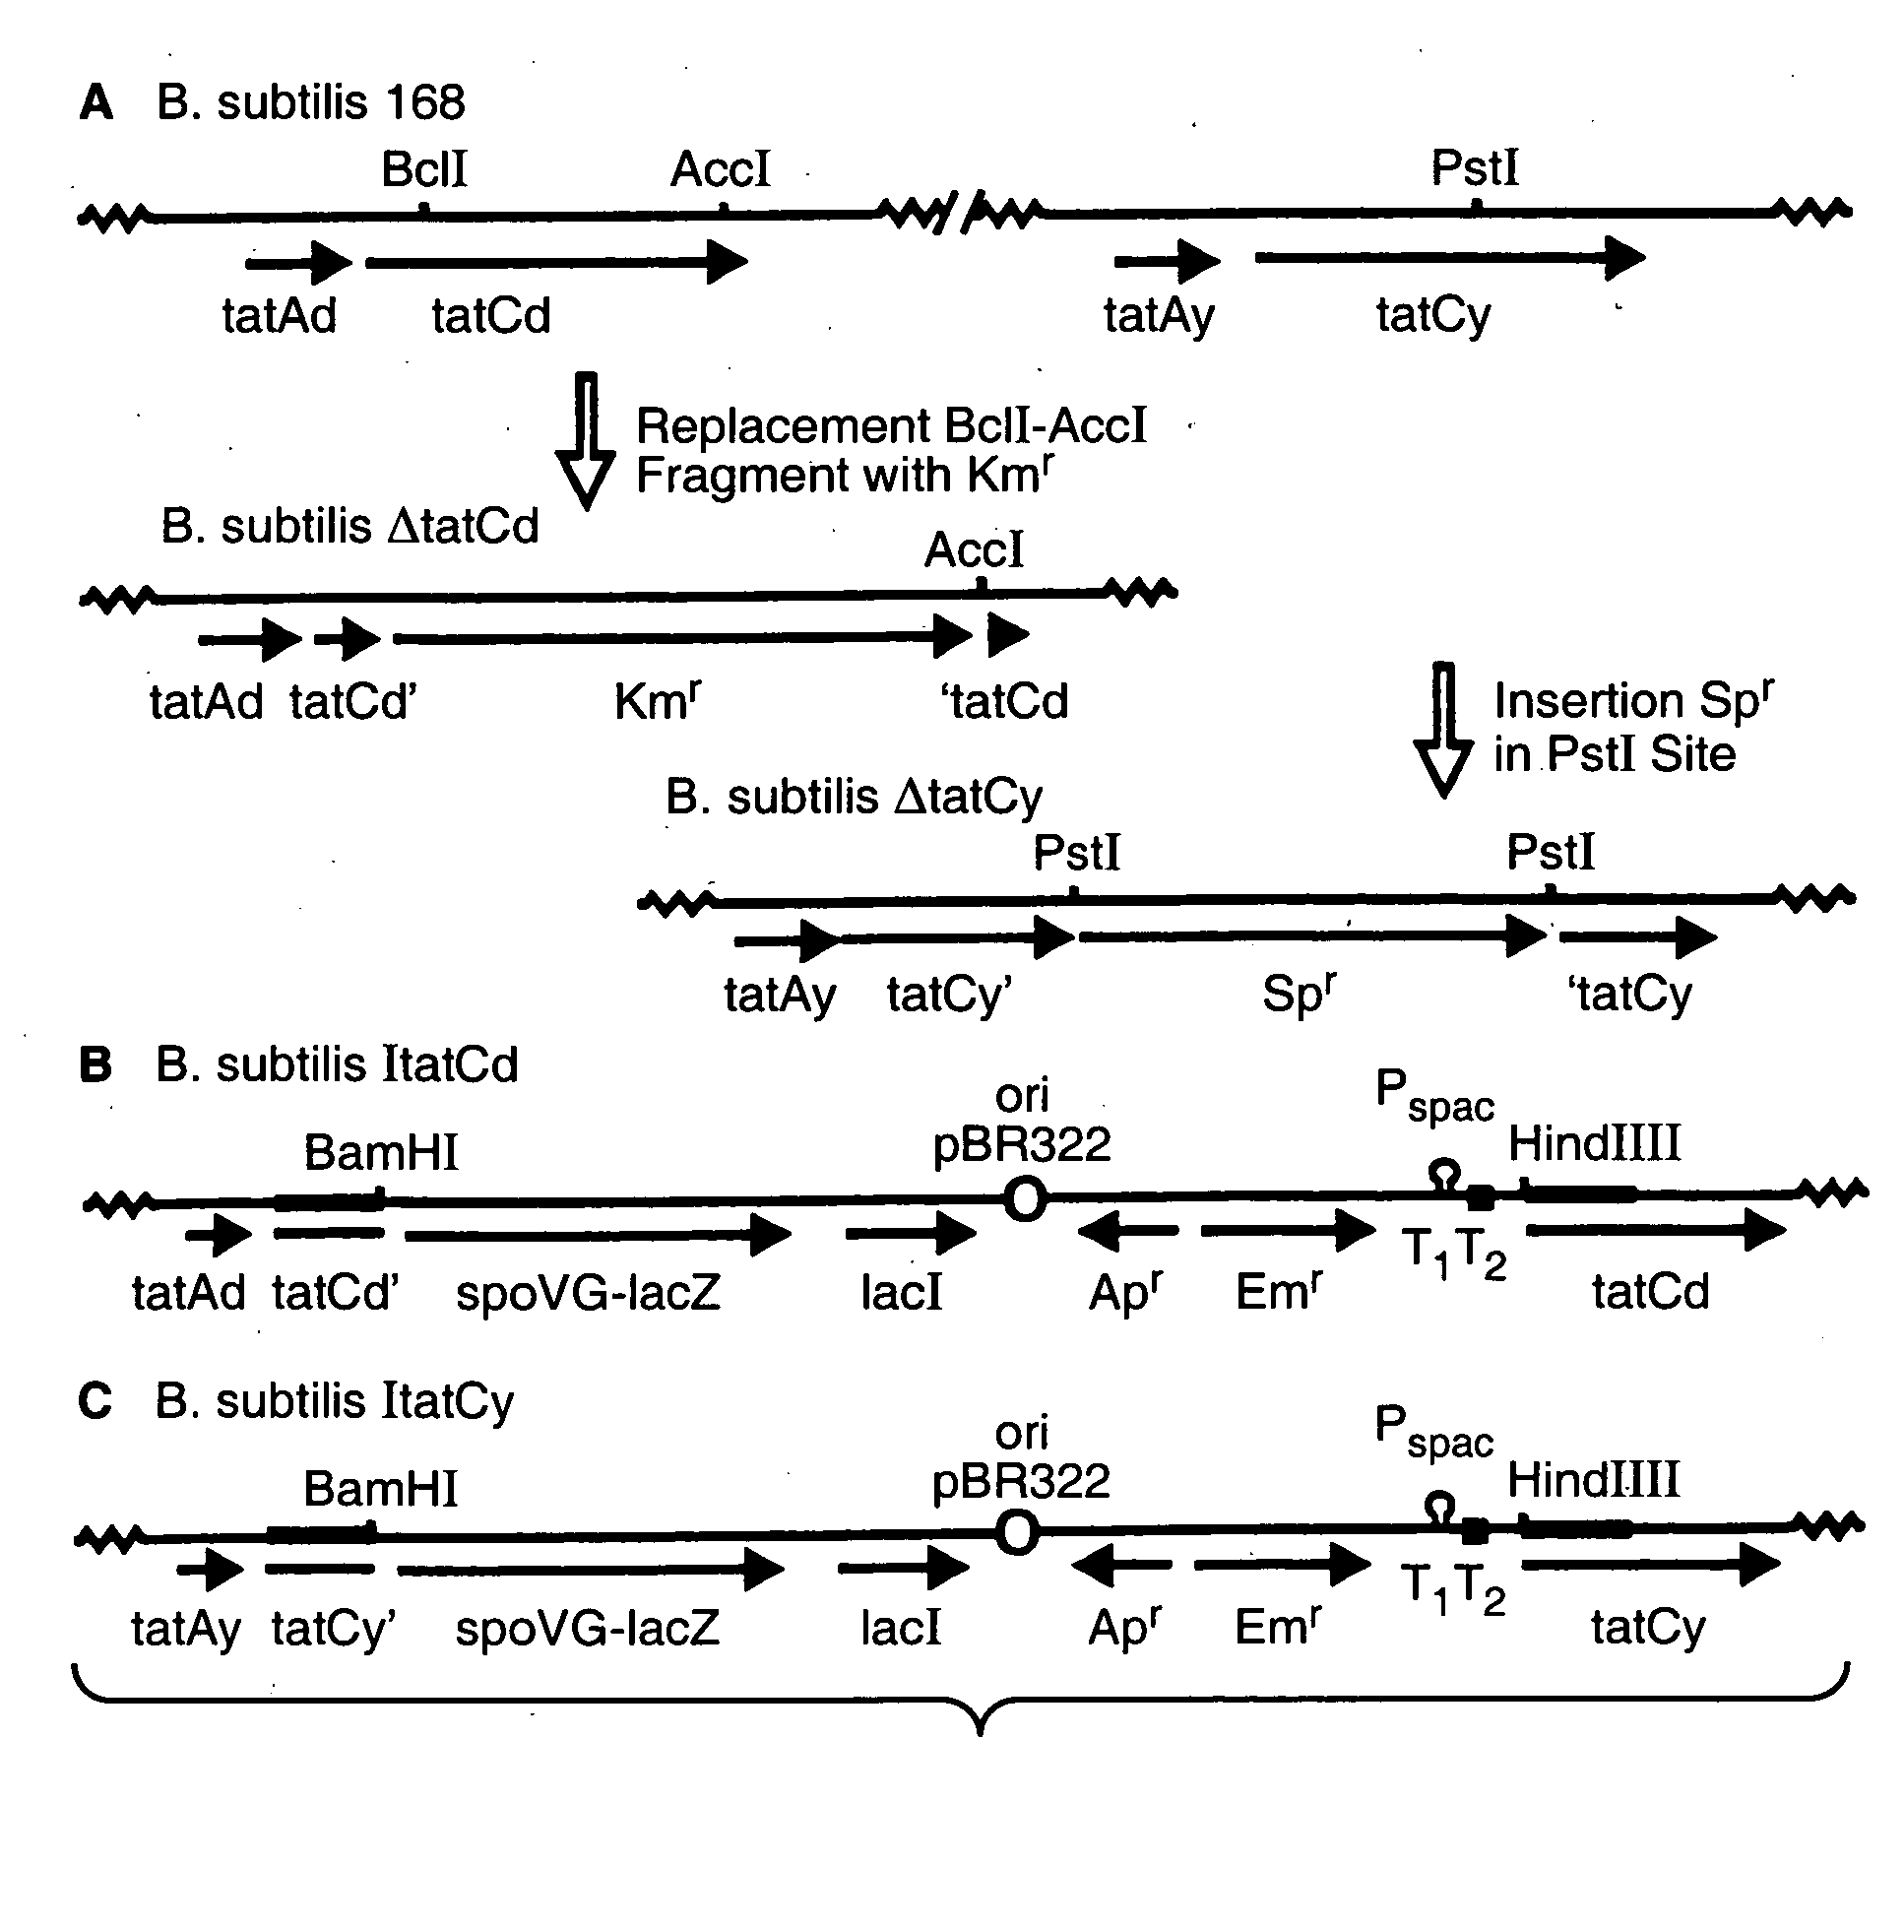 Twin-arginine translocation in Bacillus